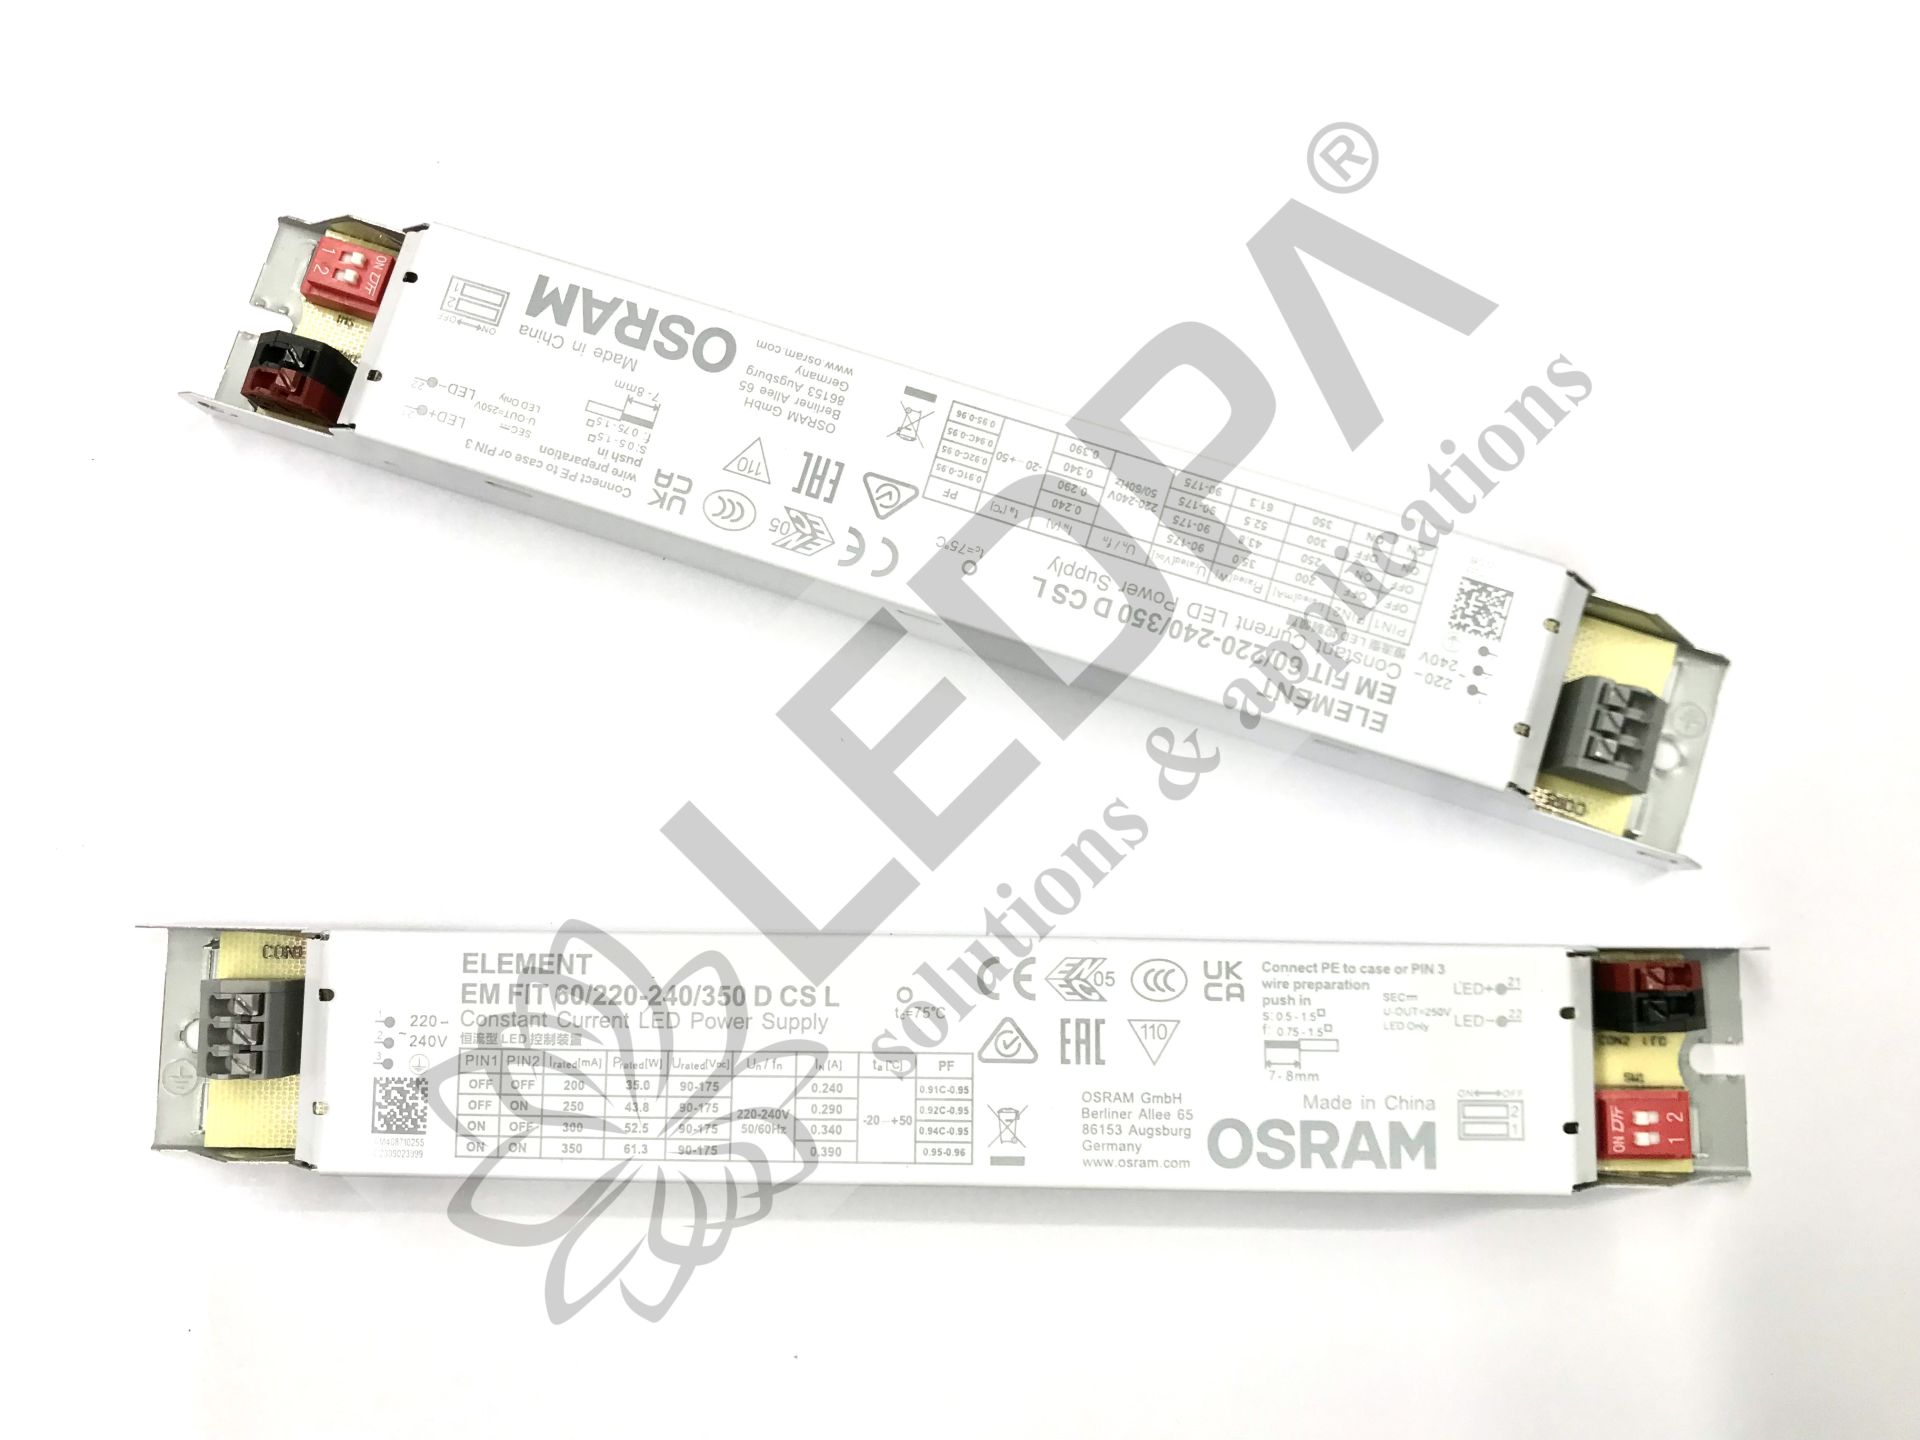 OSRAM ELEMENT EM FIT 60/220-240/350 D CS L ,  EMFIT60 , 60W 200-350MA